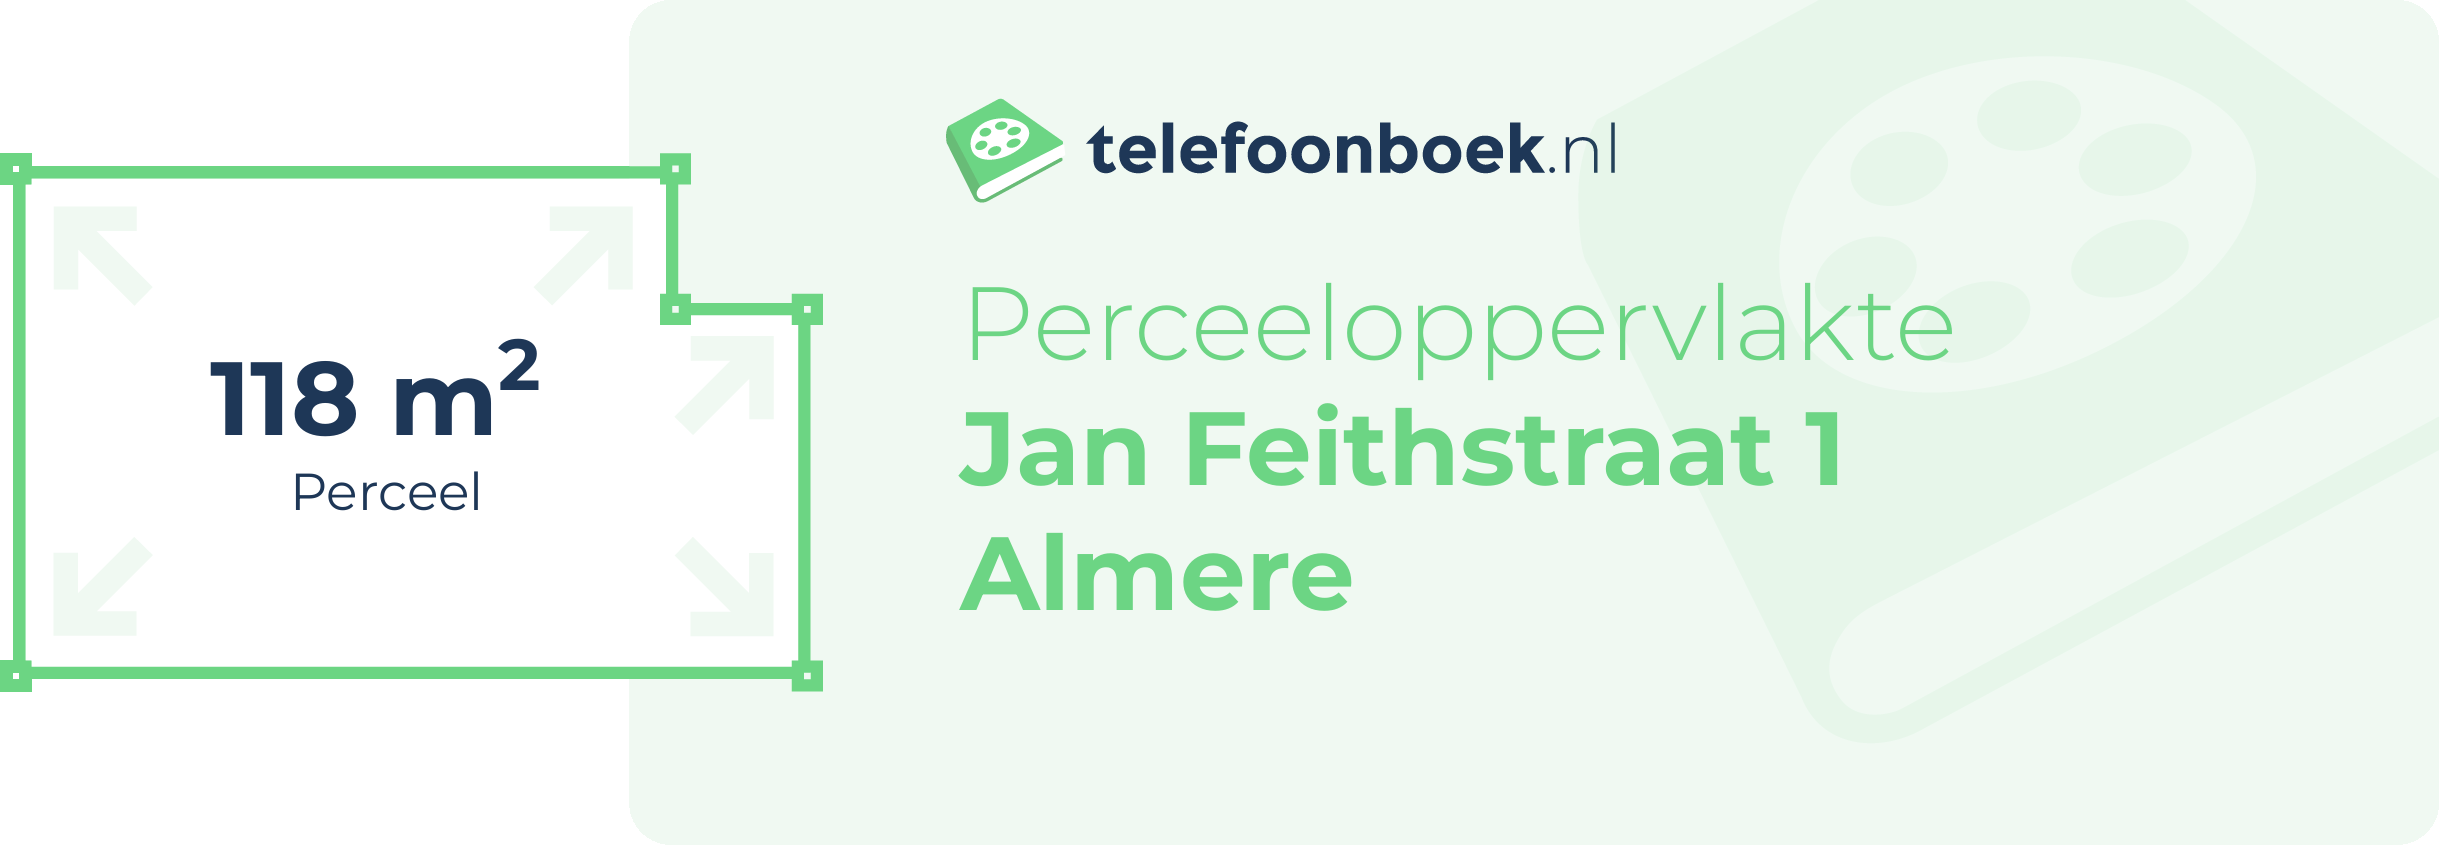 Perceeloppervlakte Jan Feithstraat 1 Almere